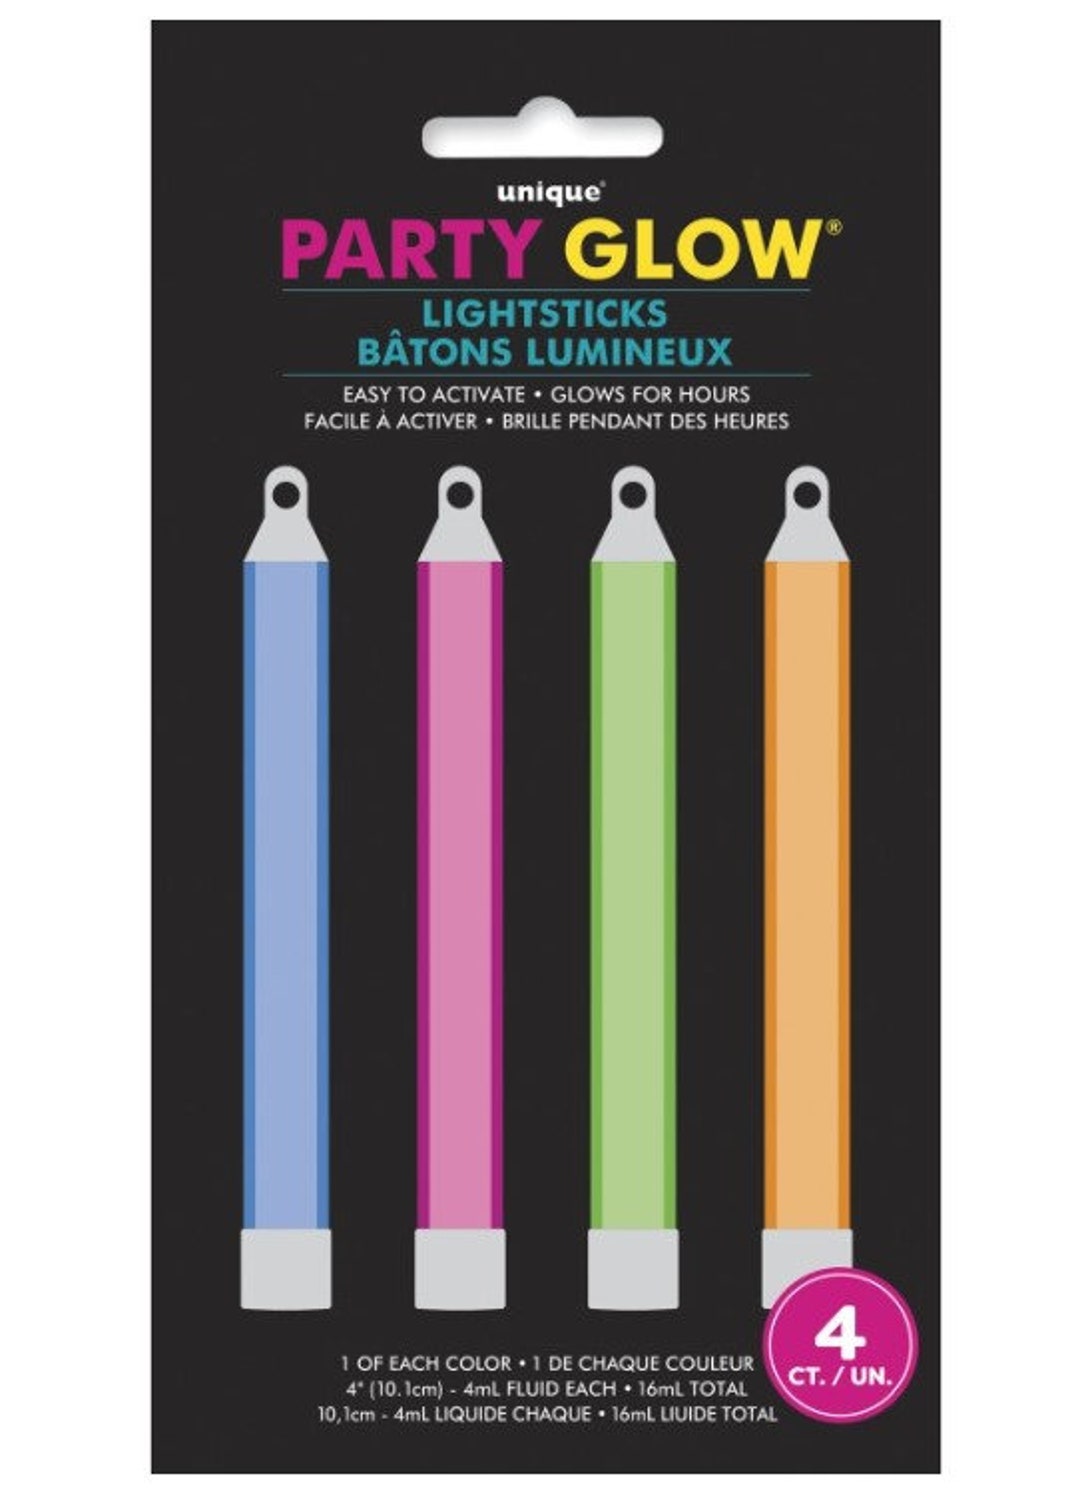 5 Minutes Ultra Bright Orange Safety Light Sticks - China Glow Stick and 6  Inch Glow Sticks price